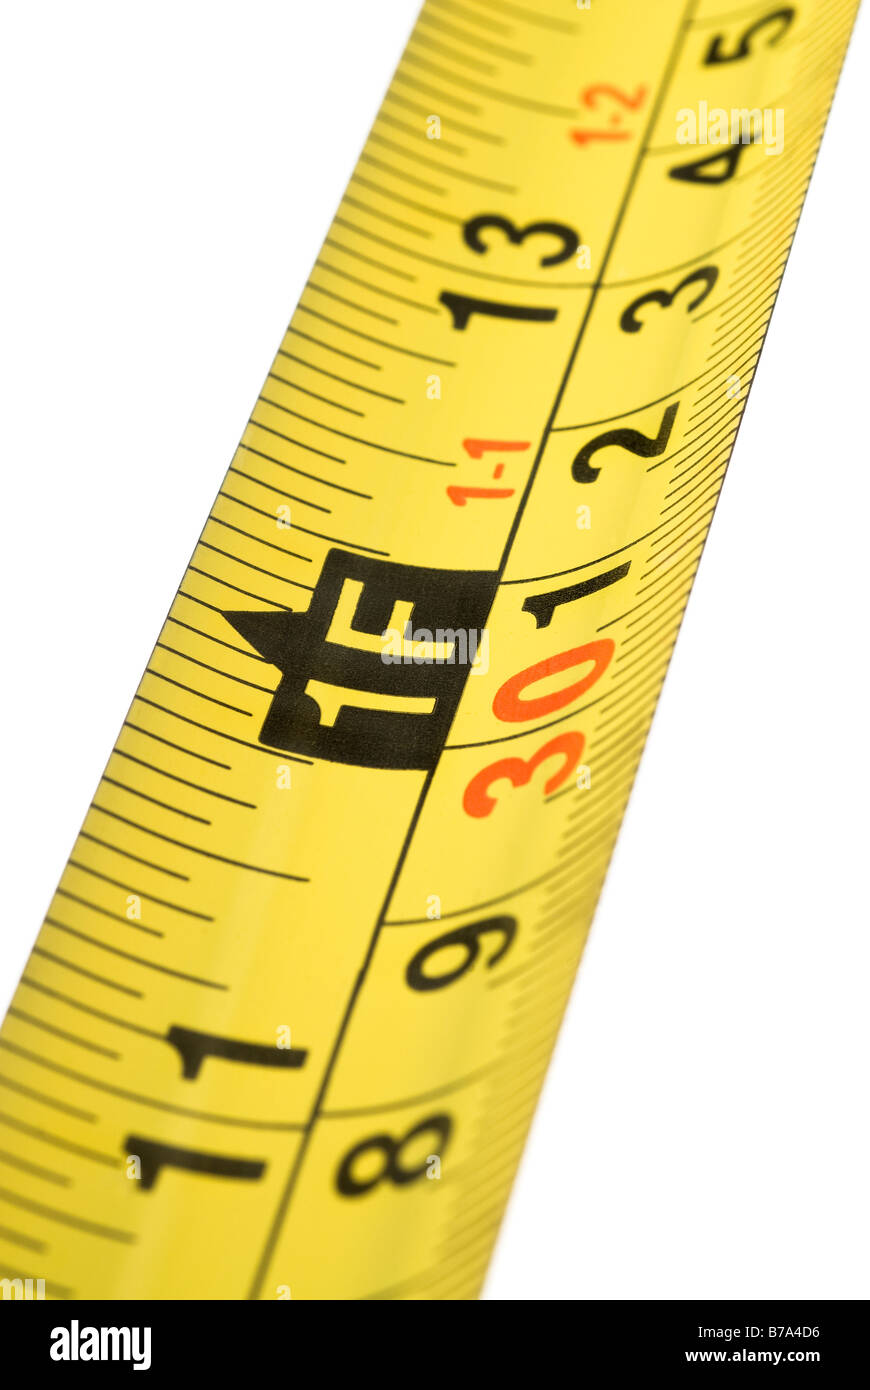 Open centimeter tape-measure Stock Photo - Alamy